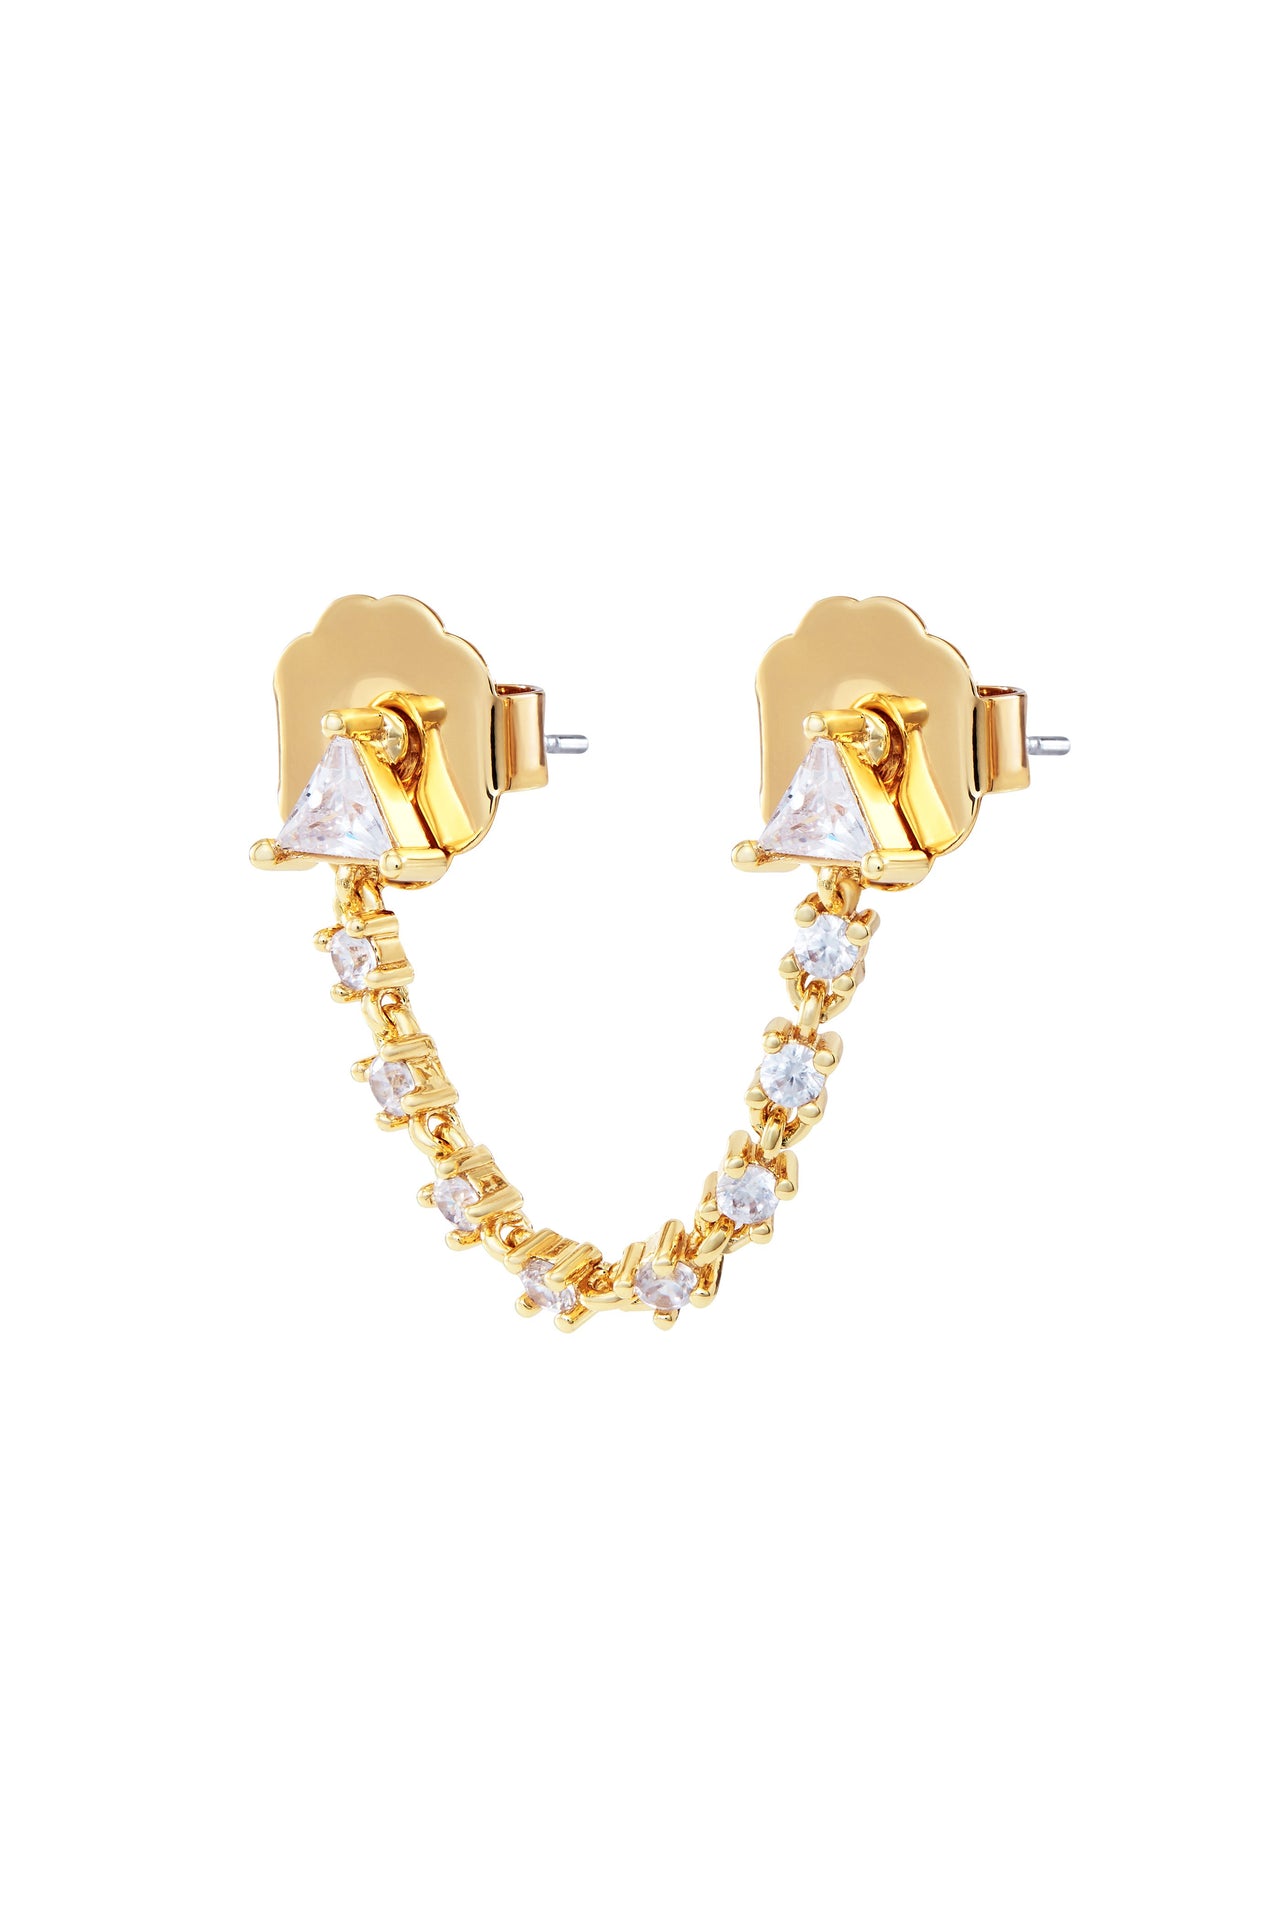 The Jaipur Earring-Earrings-Celeste Starre-Debs Boutique